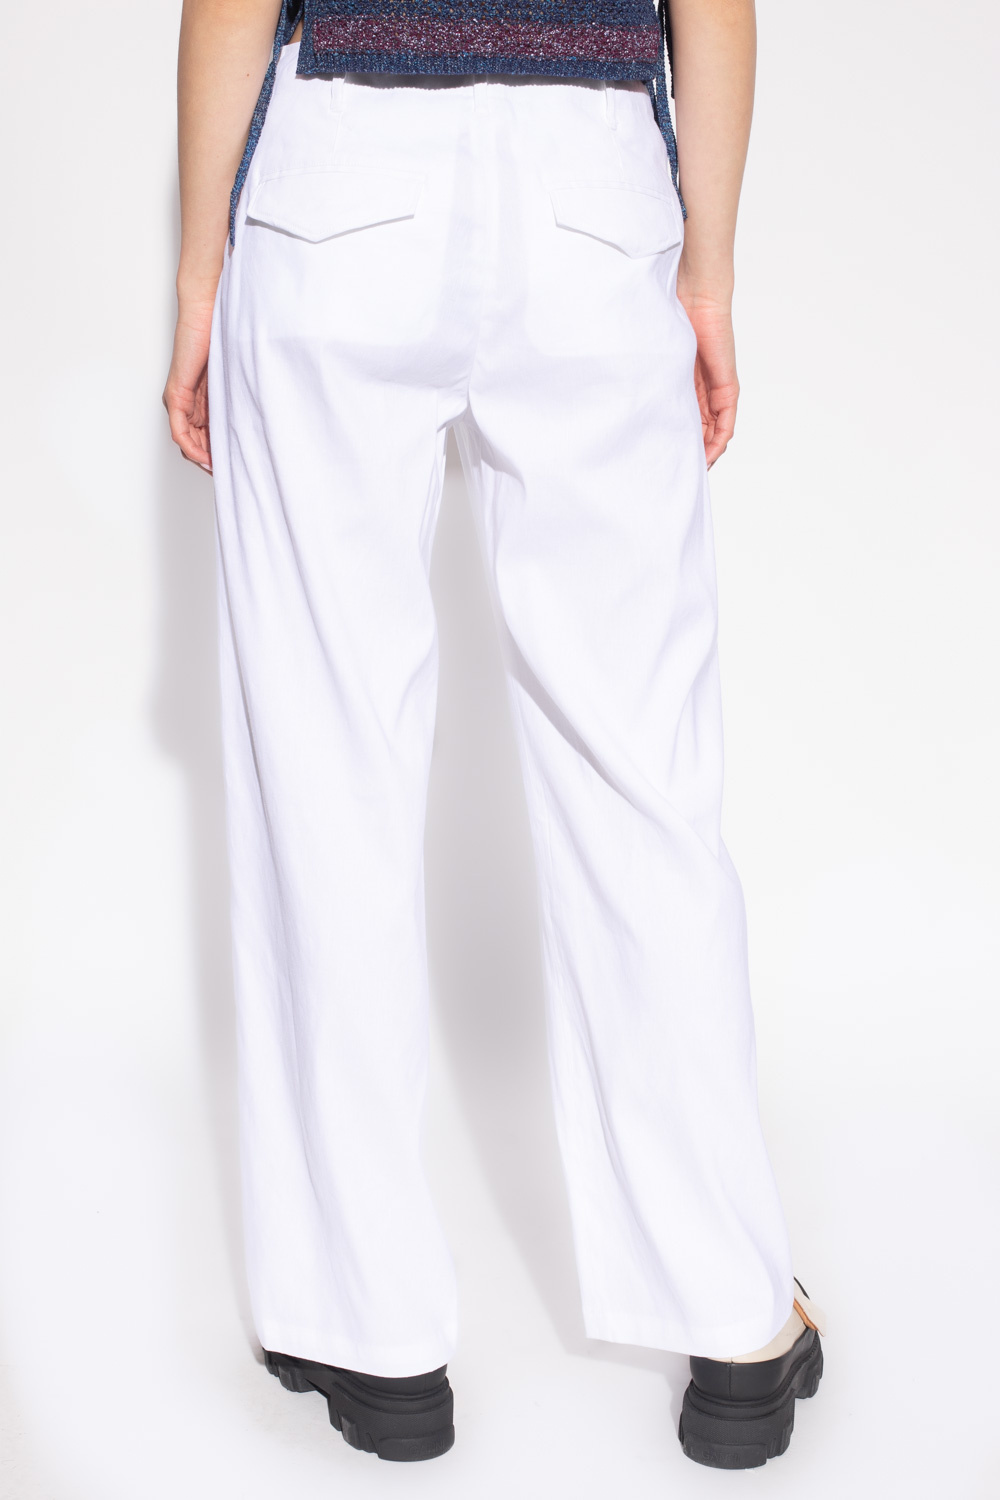 Floral Print Maxi Slip Dress  Wide-legged P9X trousers